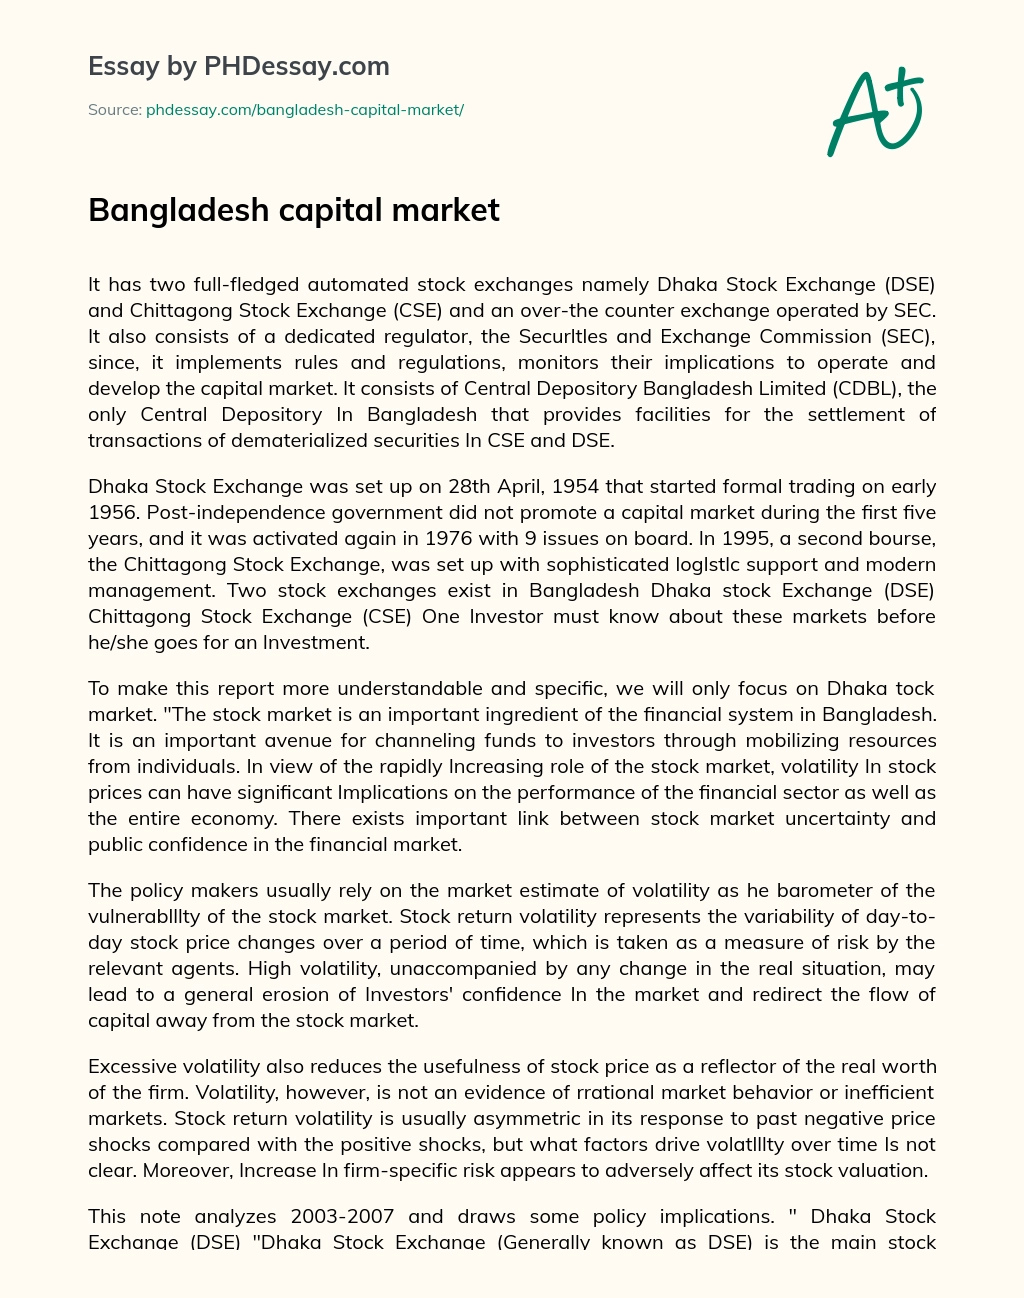 Bangladesh capital market essay